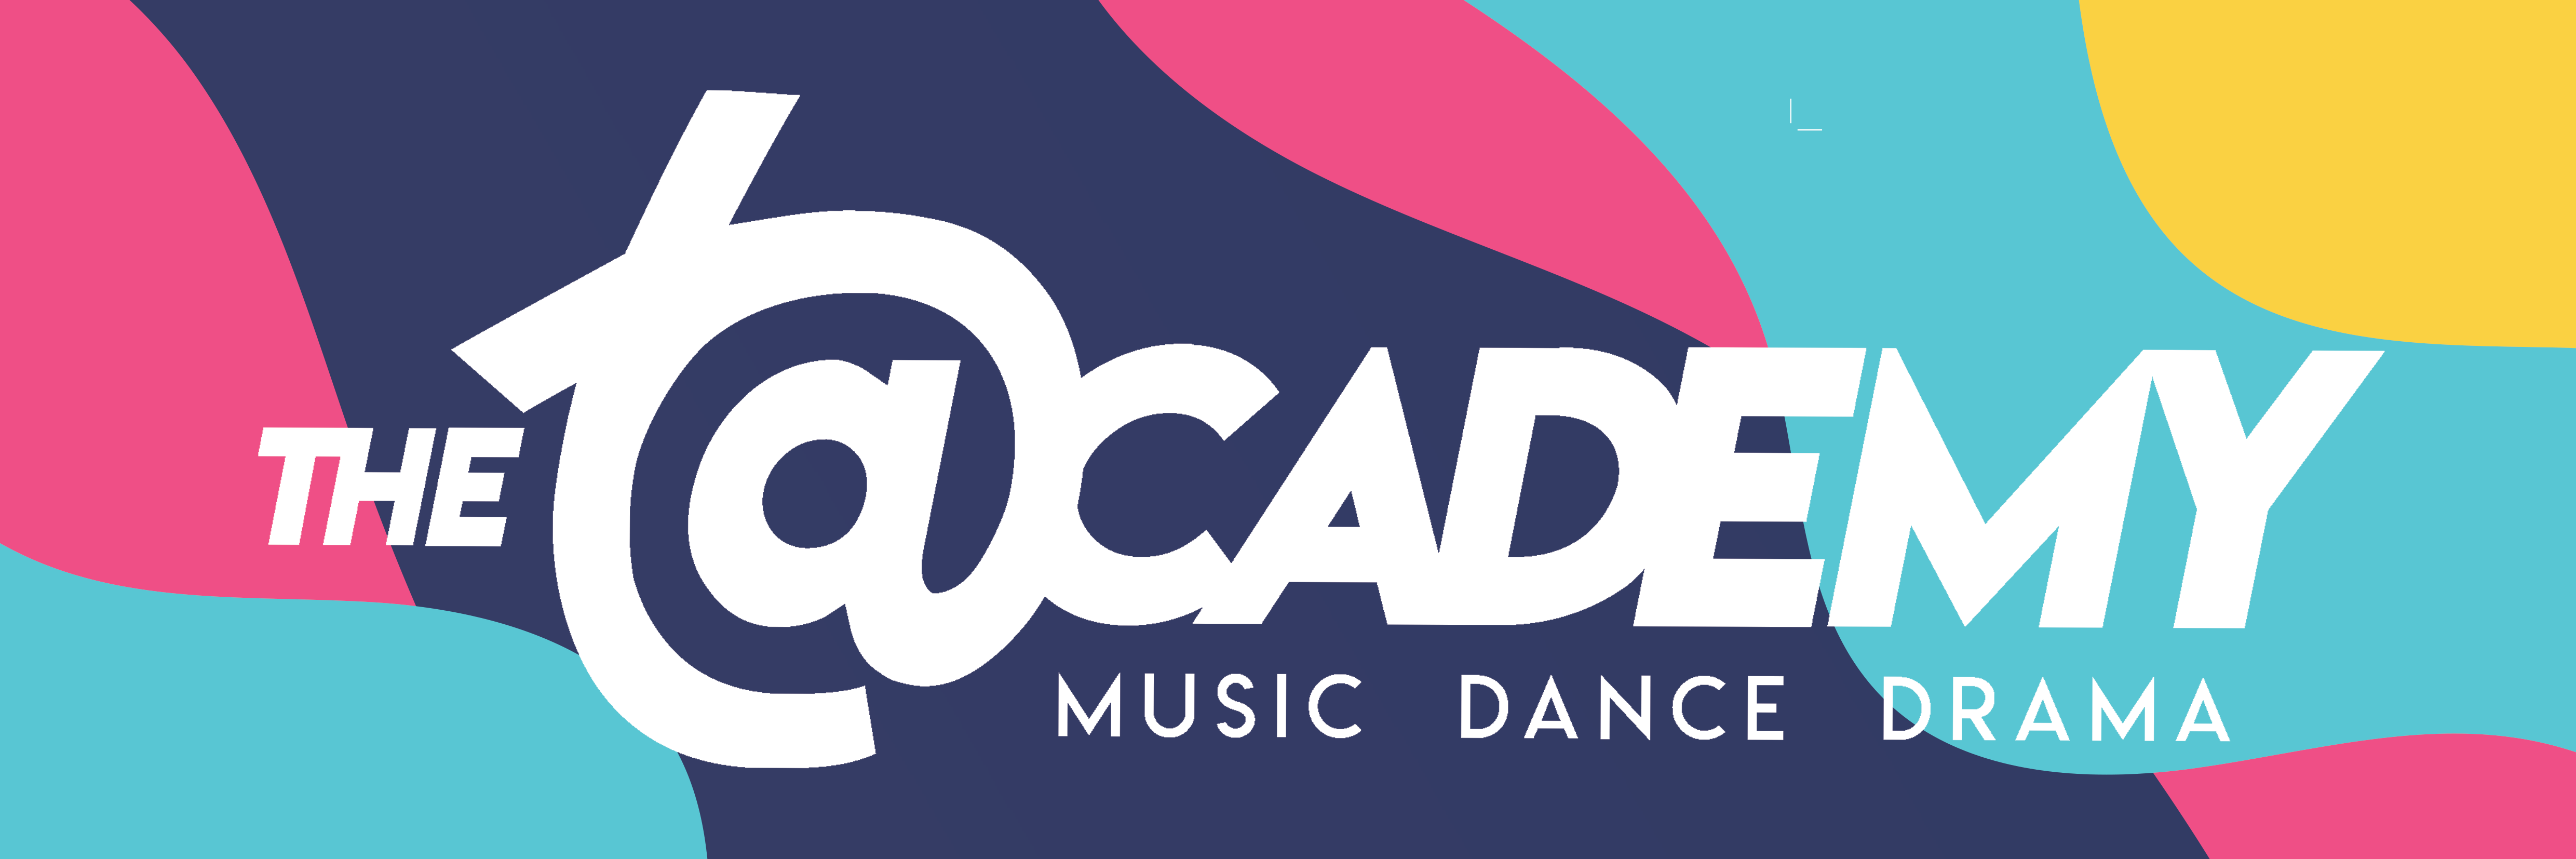 Academy of Music Dance Drama